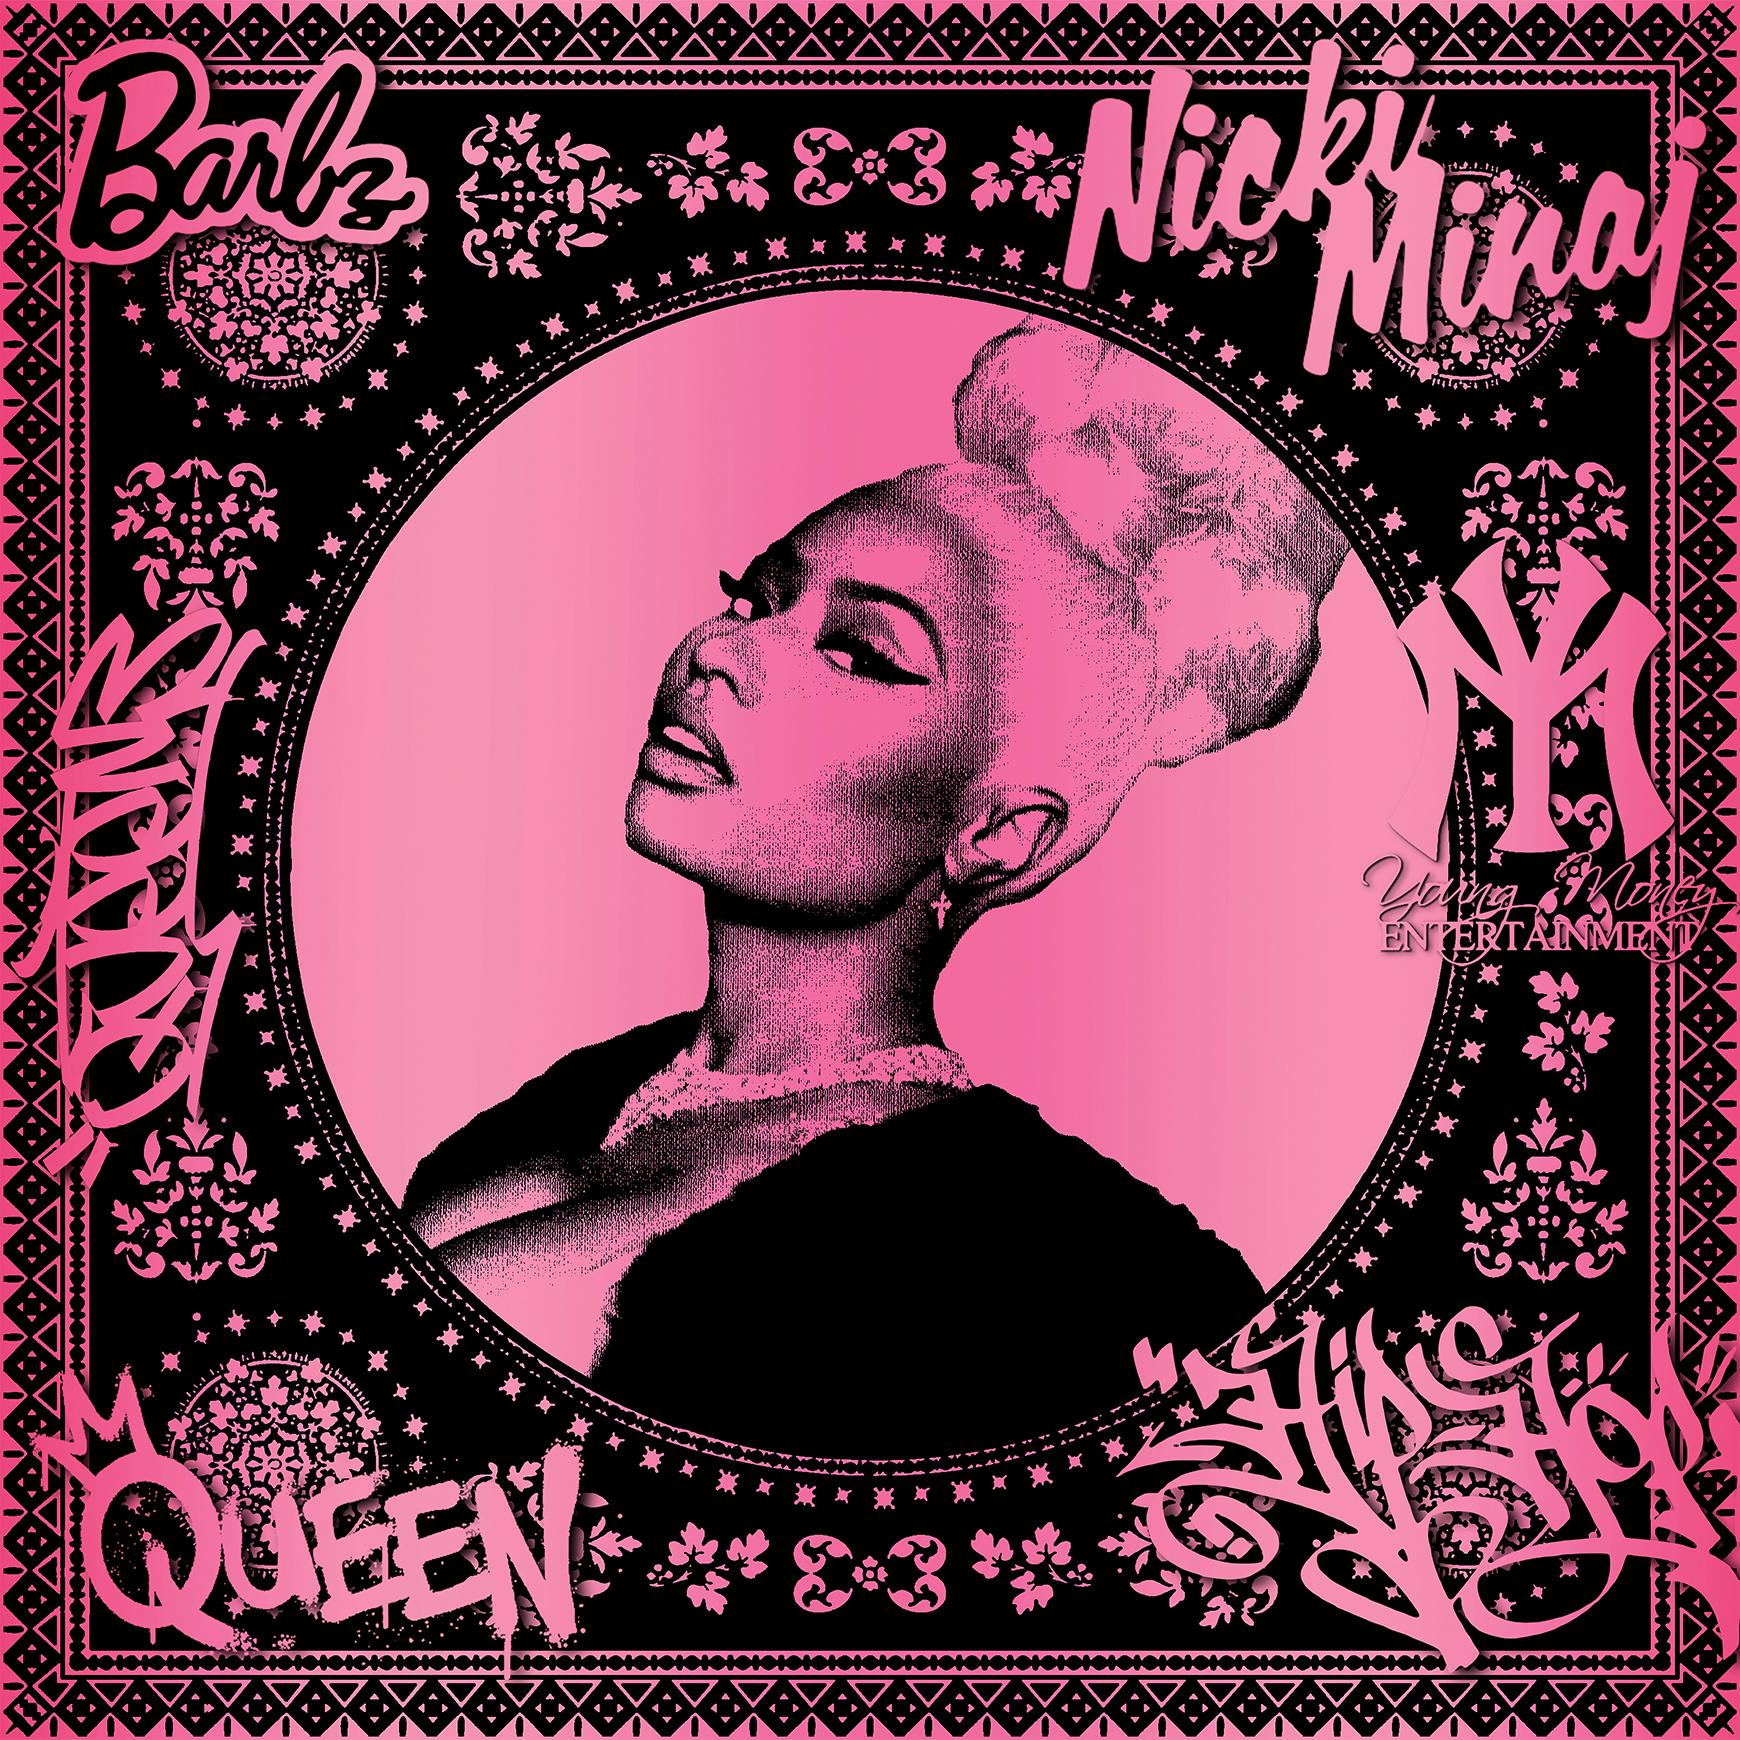 Nicki Minaj (50 ans, Hip Hop, Rap, Iconic, Artiste, Musician, Rapper) - Print de Agent X